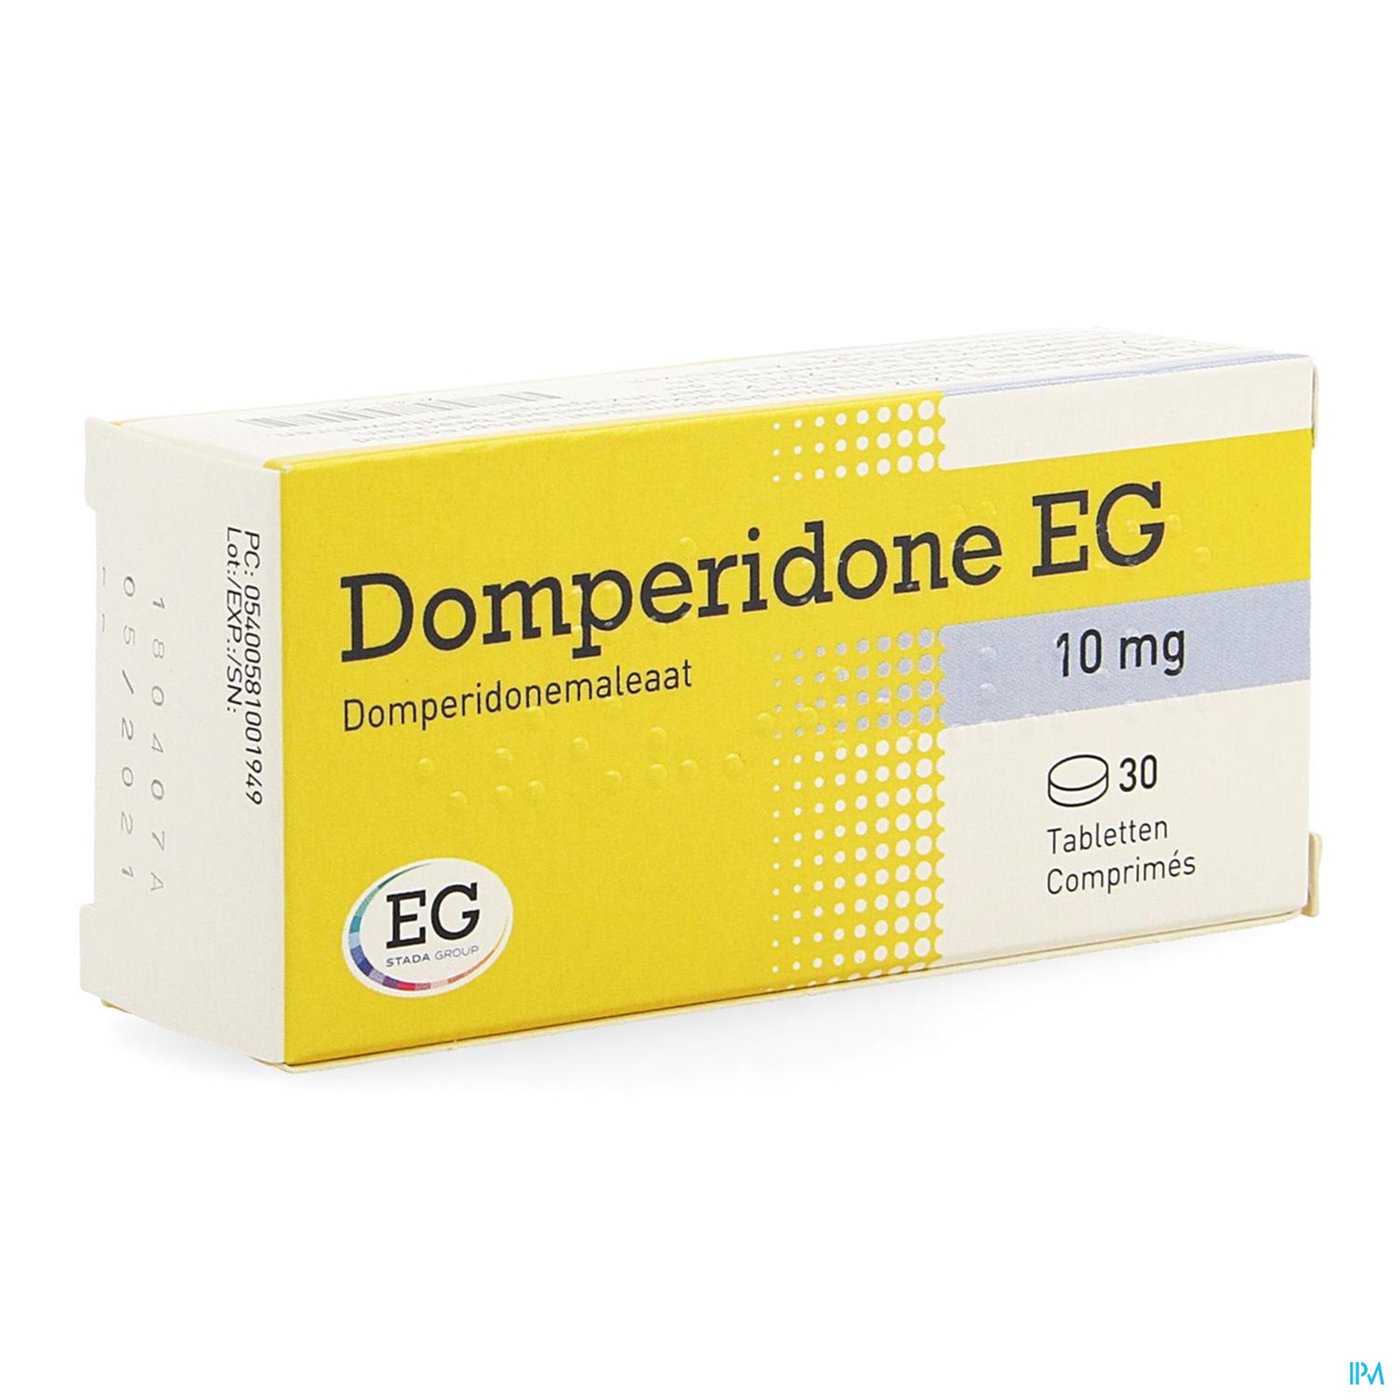 Domperidone EG Tabl 30 X 10 Mg packshot